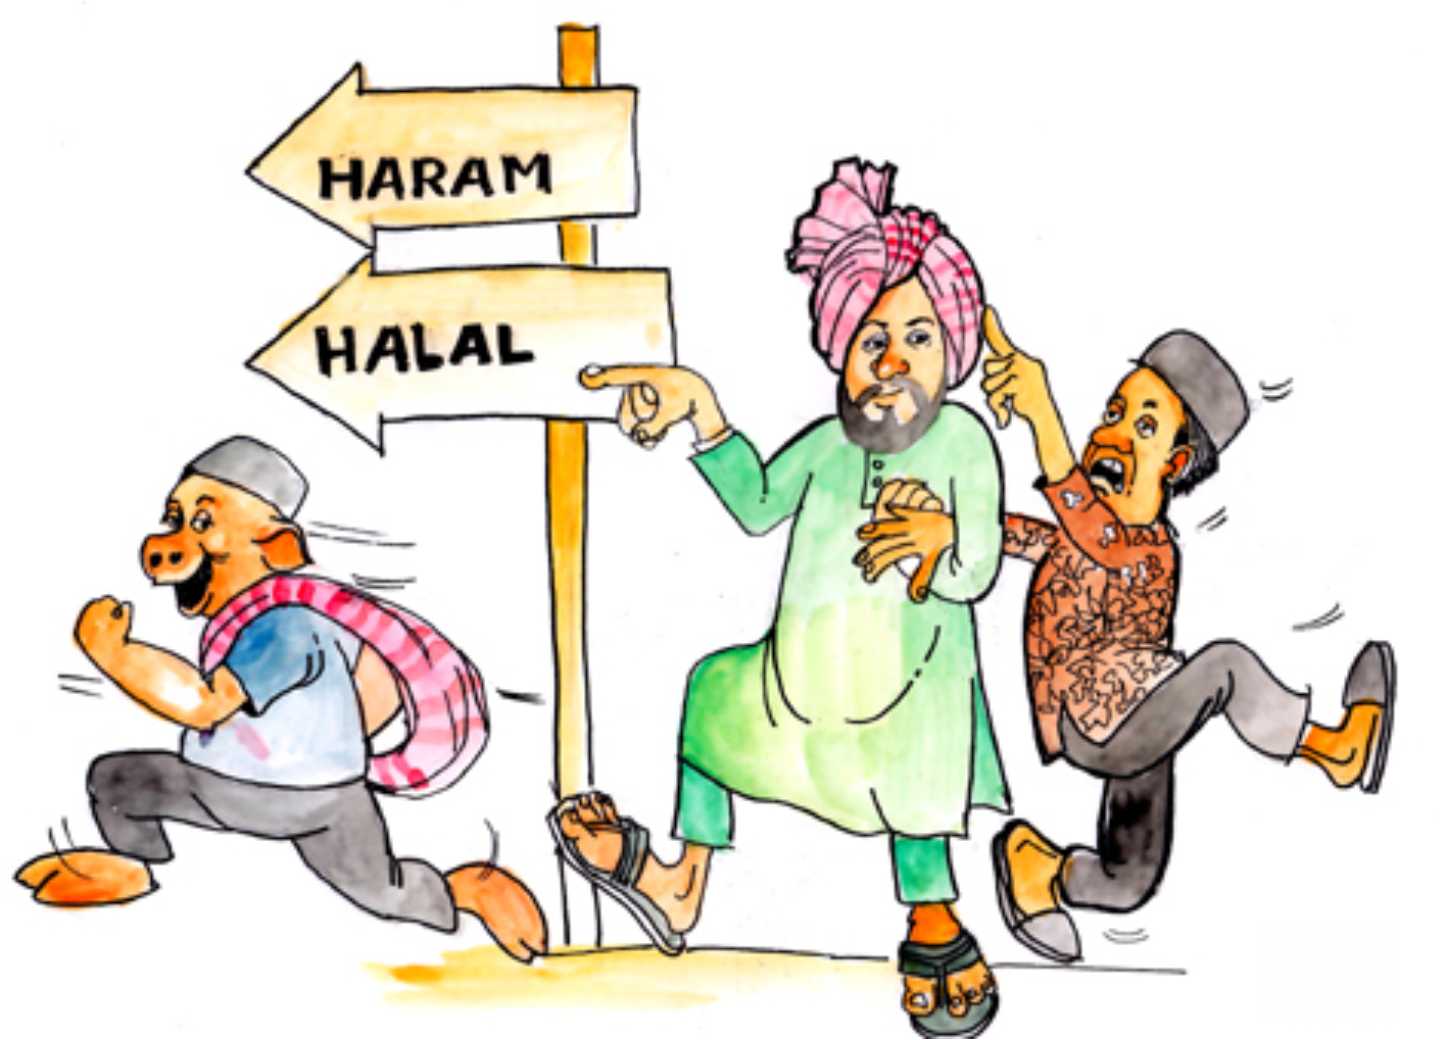 halal and haram in islam